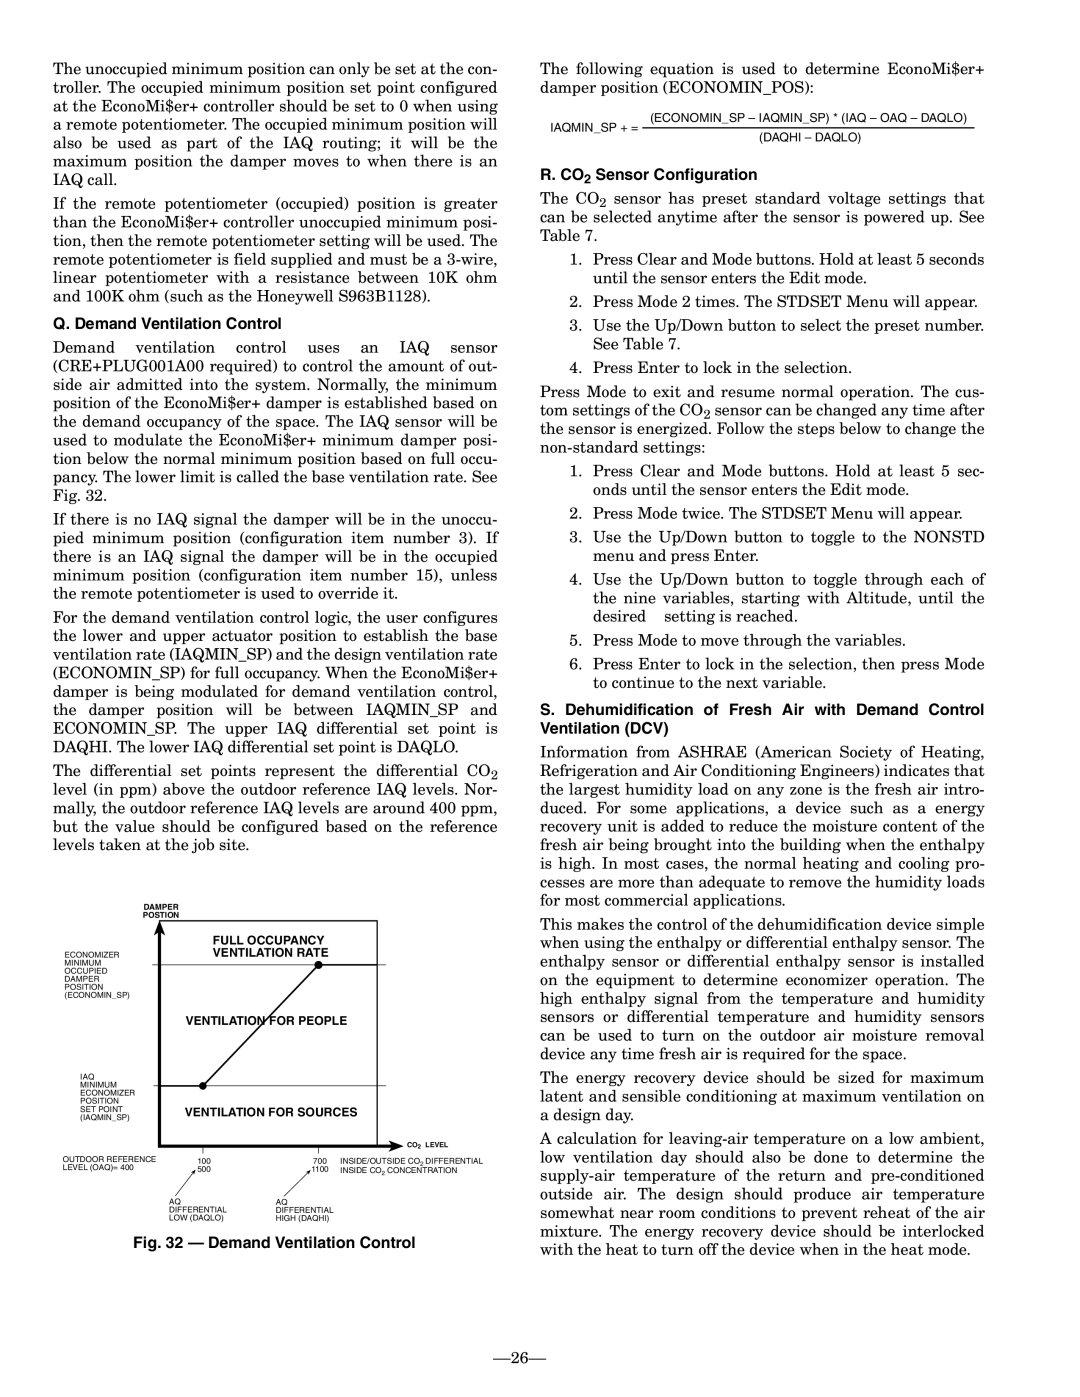 Bryant 580F installation instructions 26, Q. Demand Ventilation Control, R. CO2 Sensor Configuration 